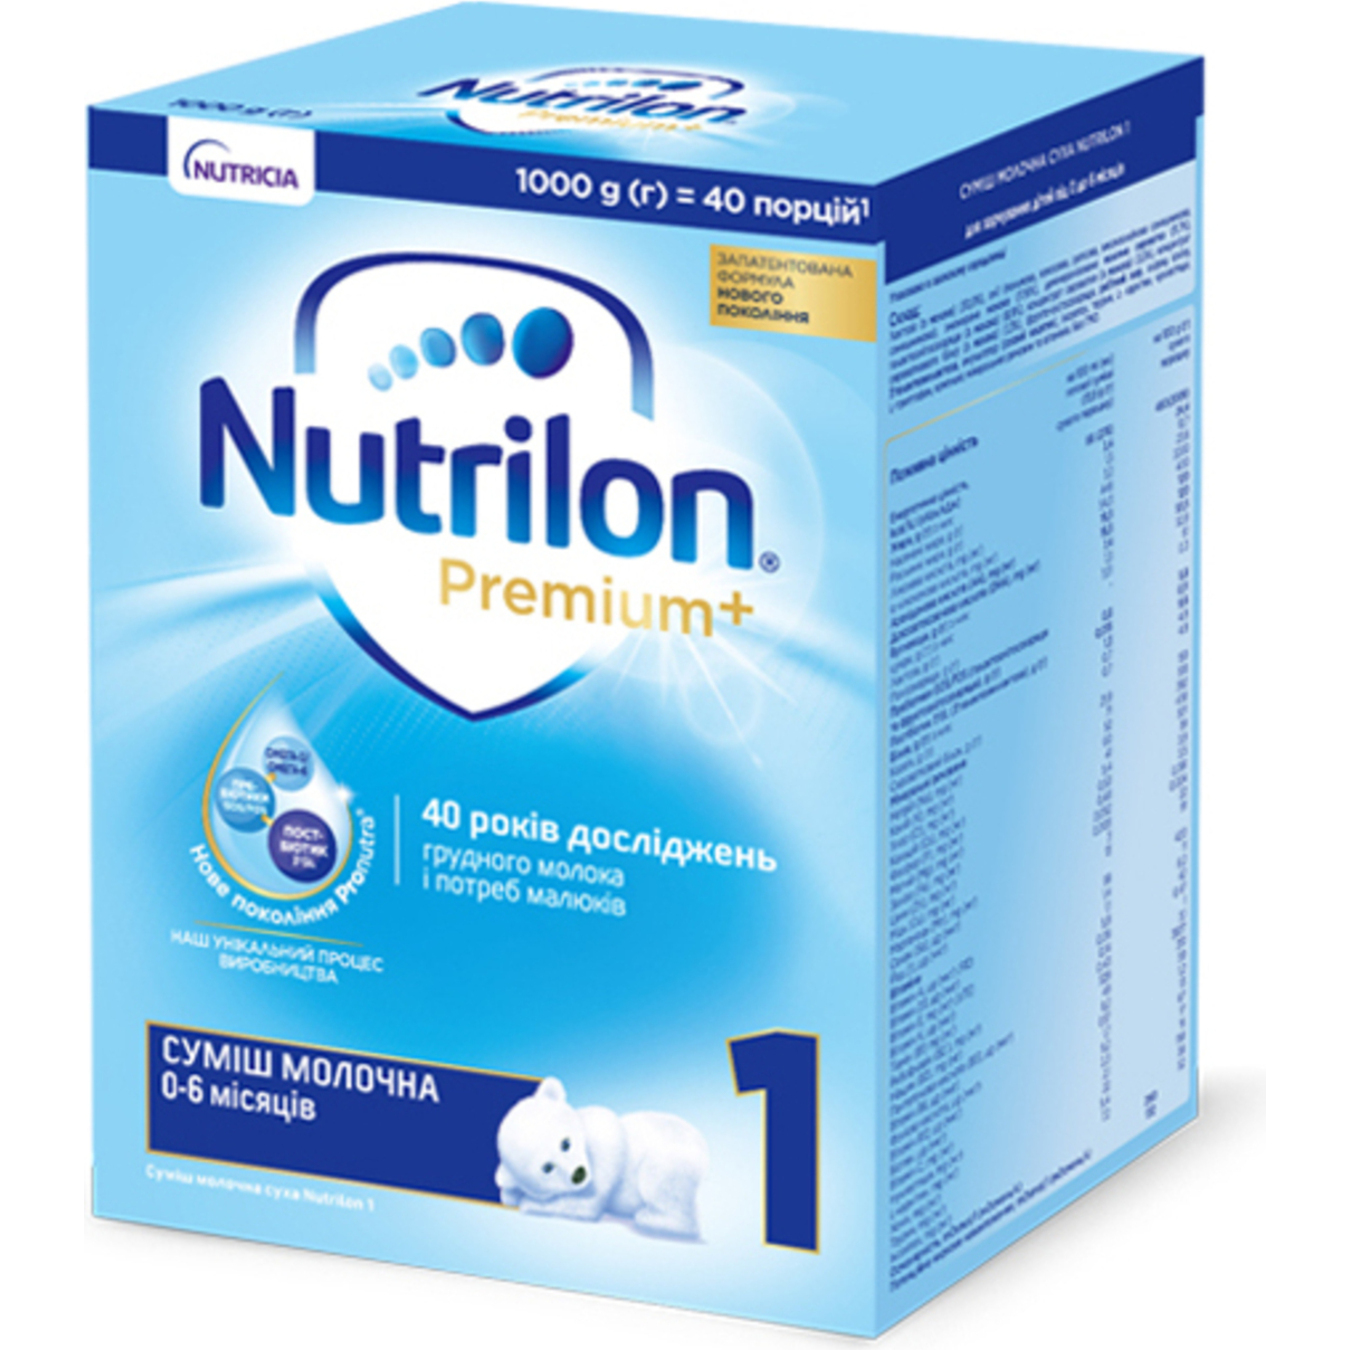 Nestle Nan 2 Optipro Dry Milk Mixture for 6+ Months Babies 800g